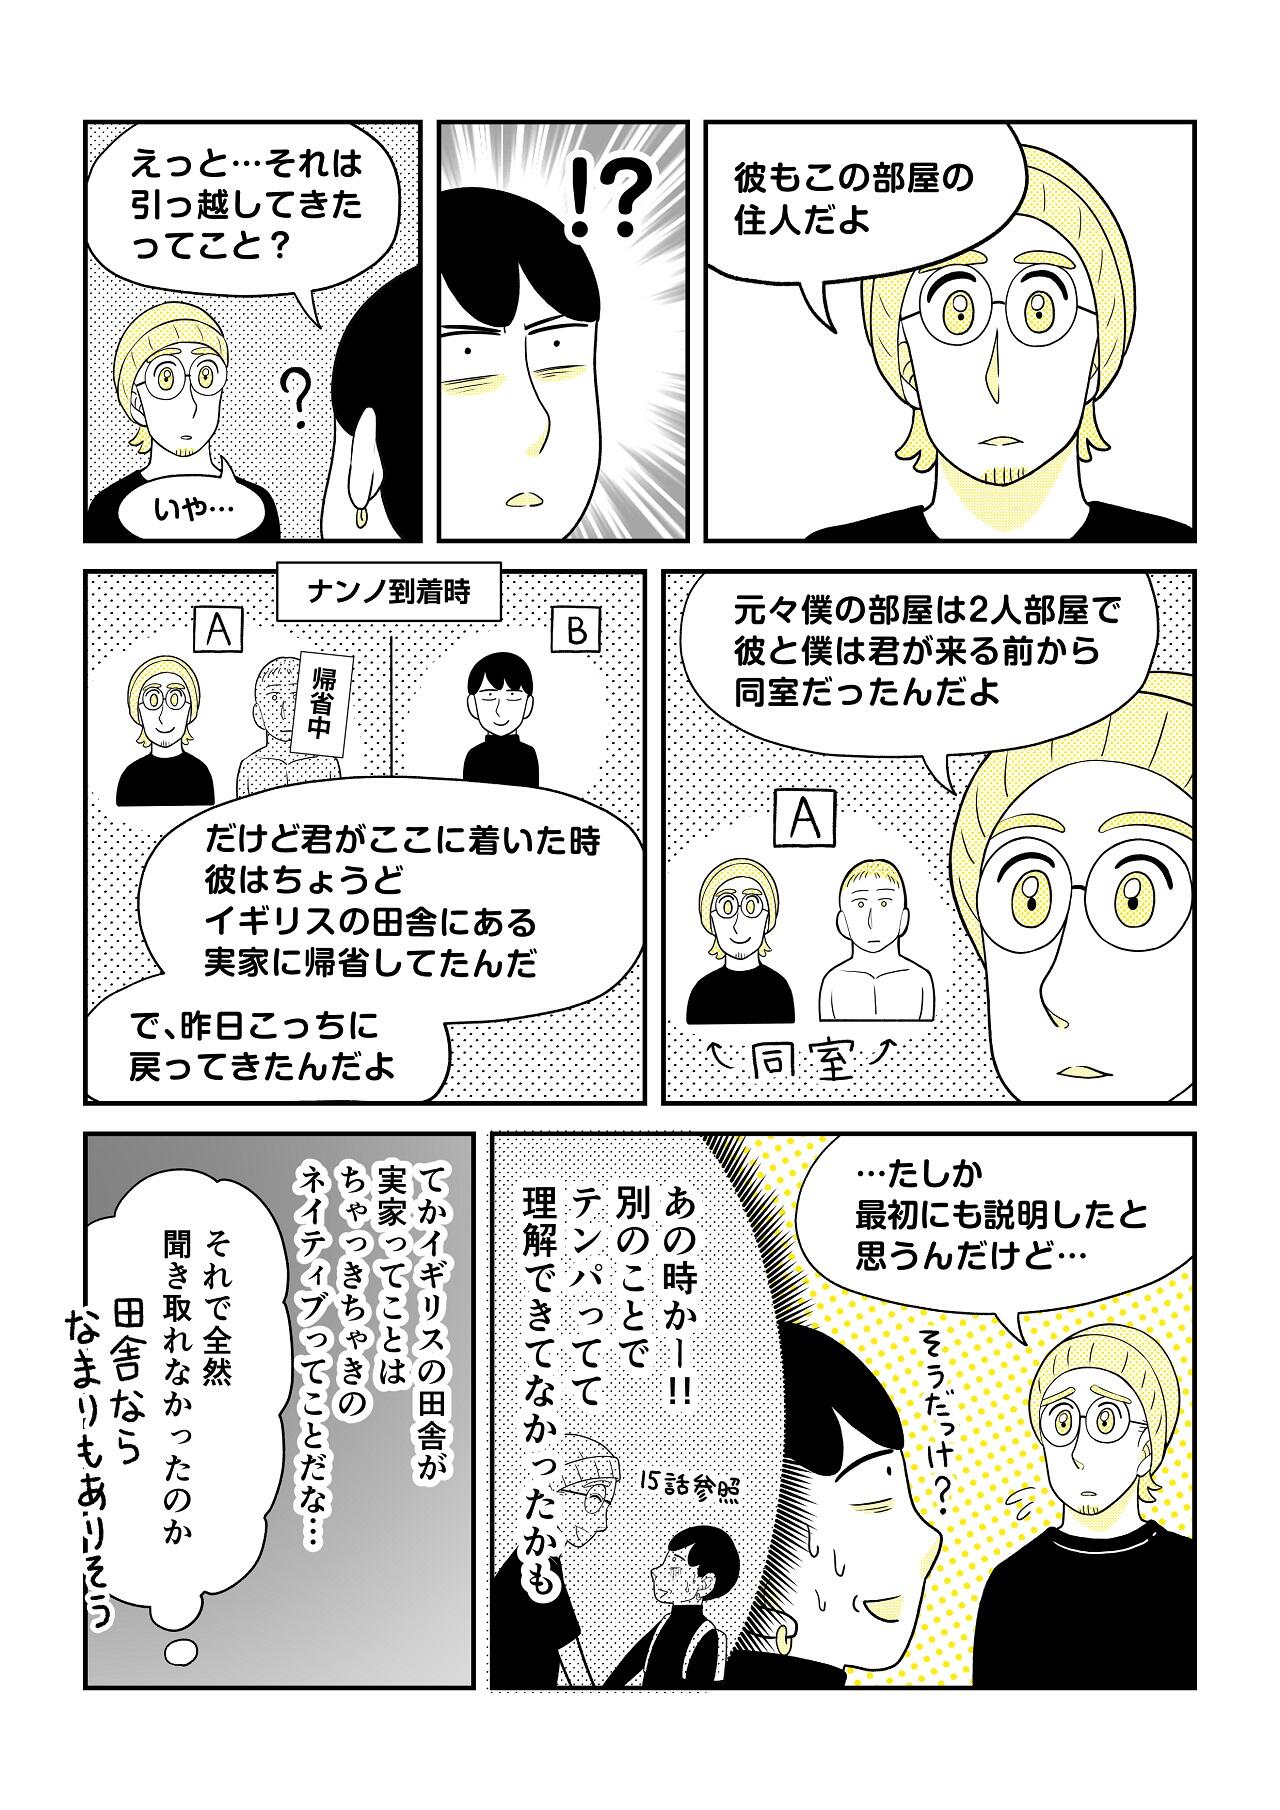 https://www.ryugaku.co.jp/column/images/24_05_1280.jpg